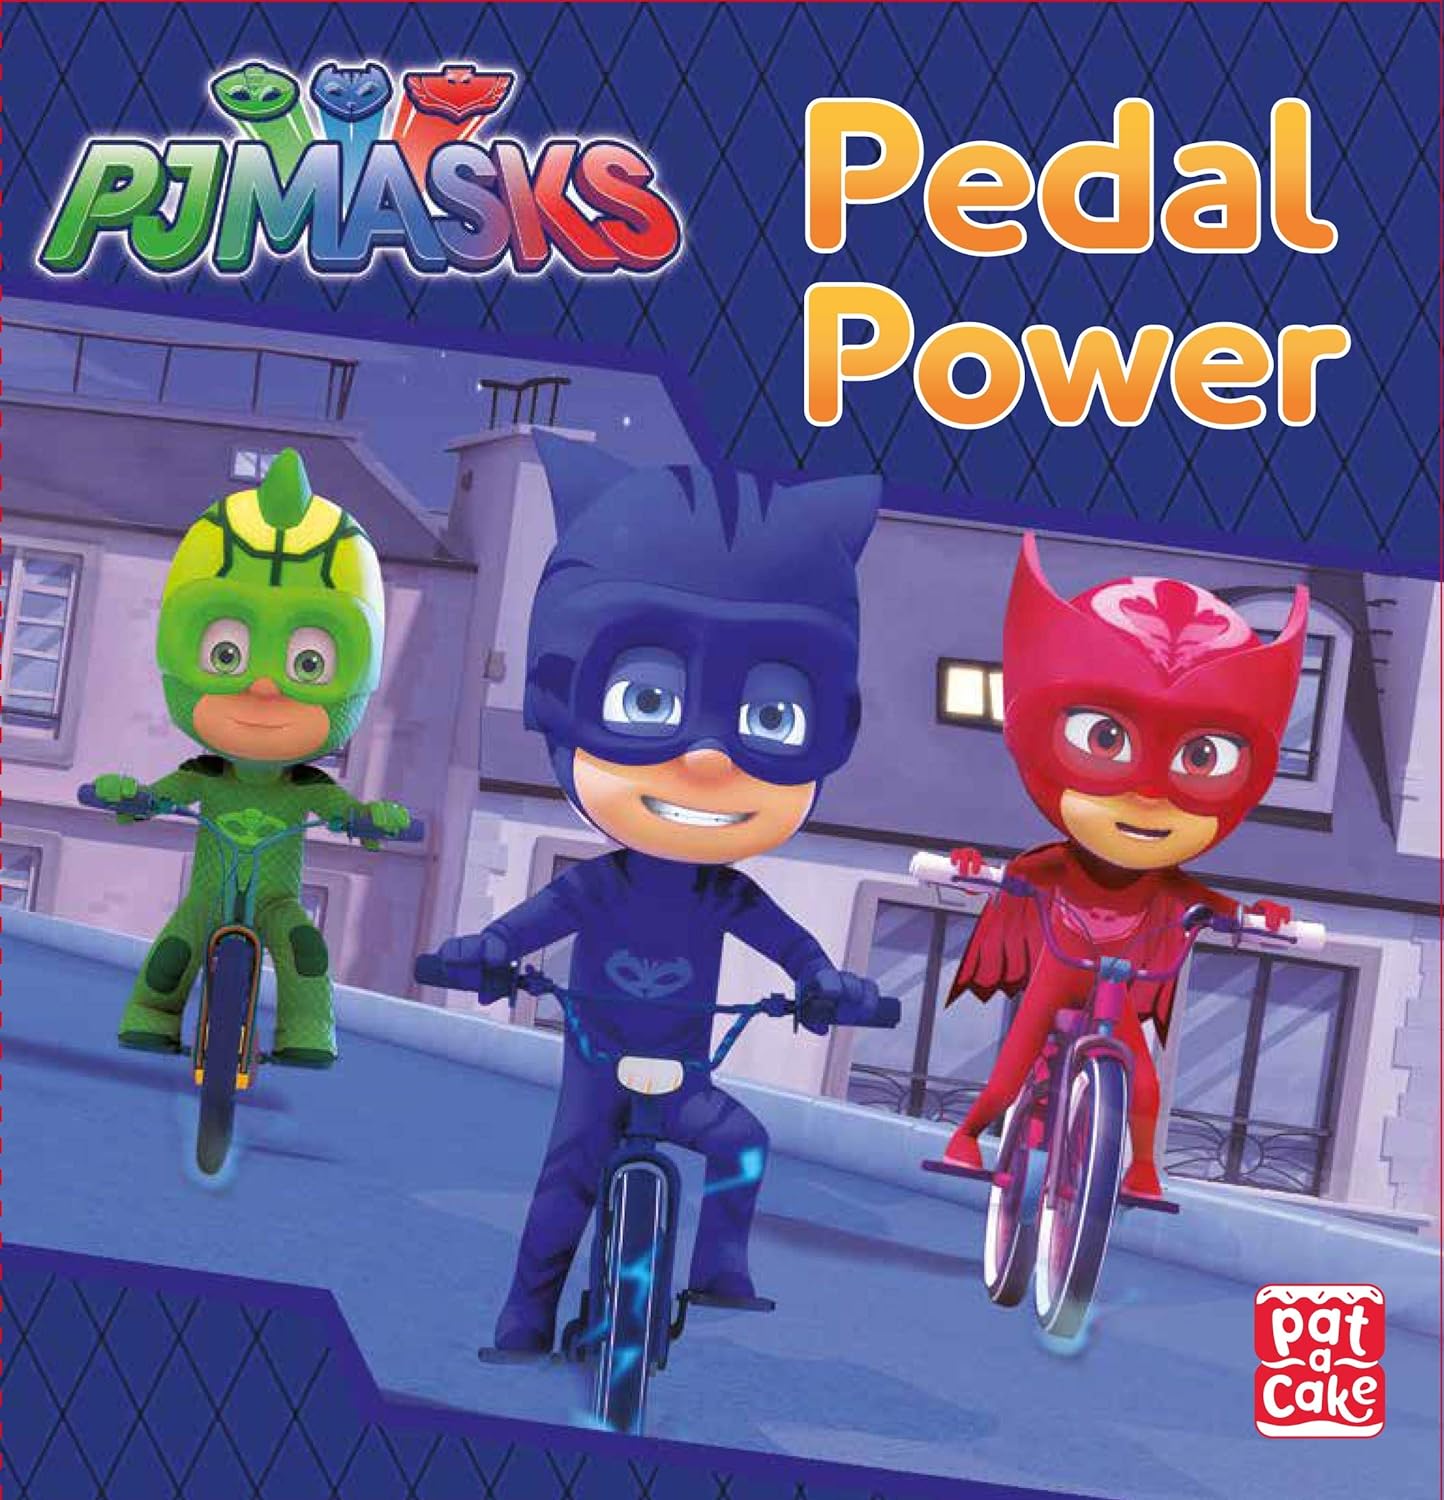 Pedal Power: A PJ Masks story book